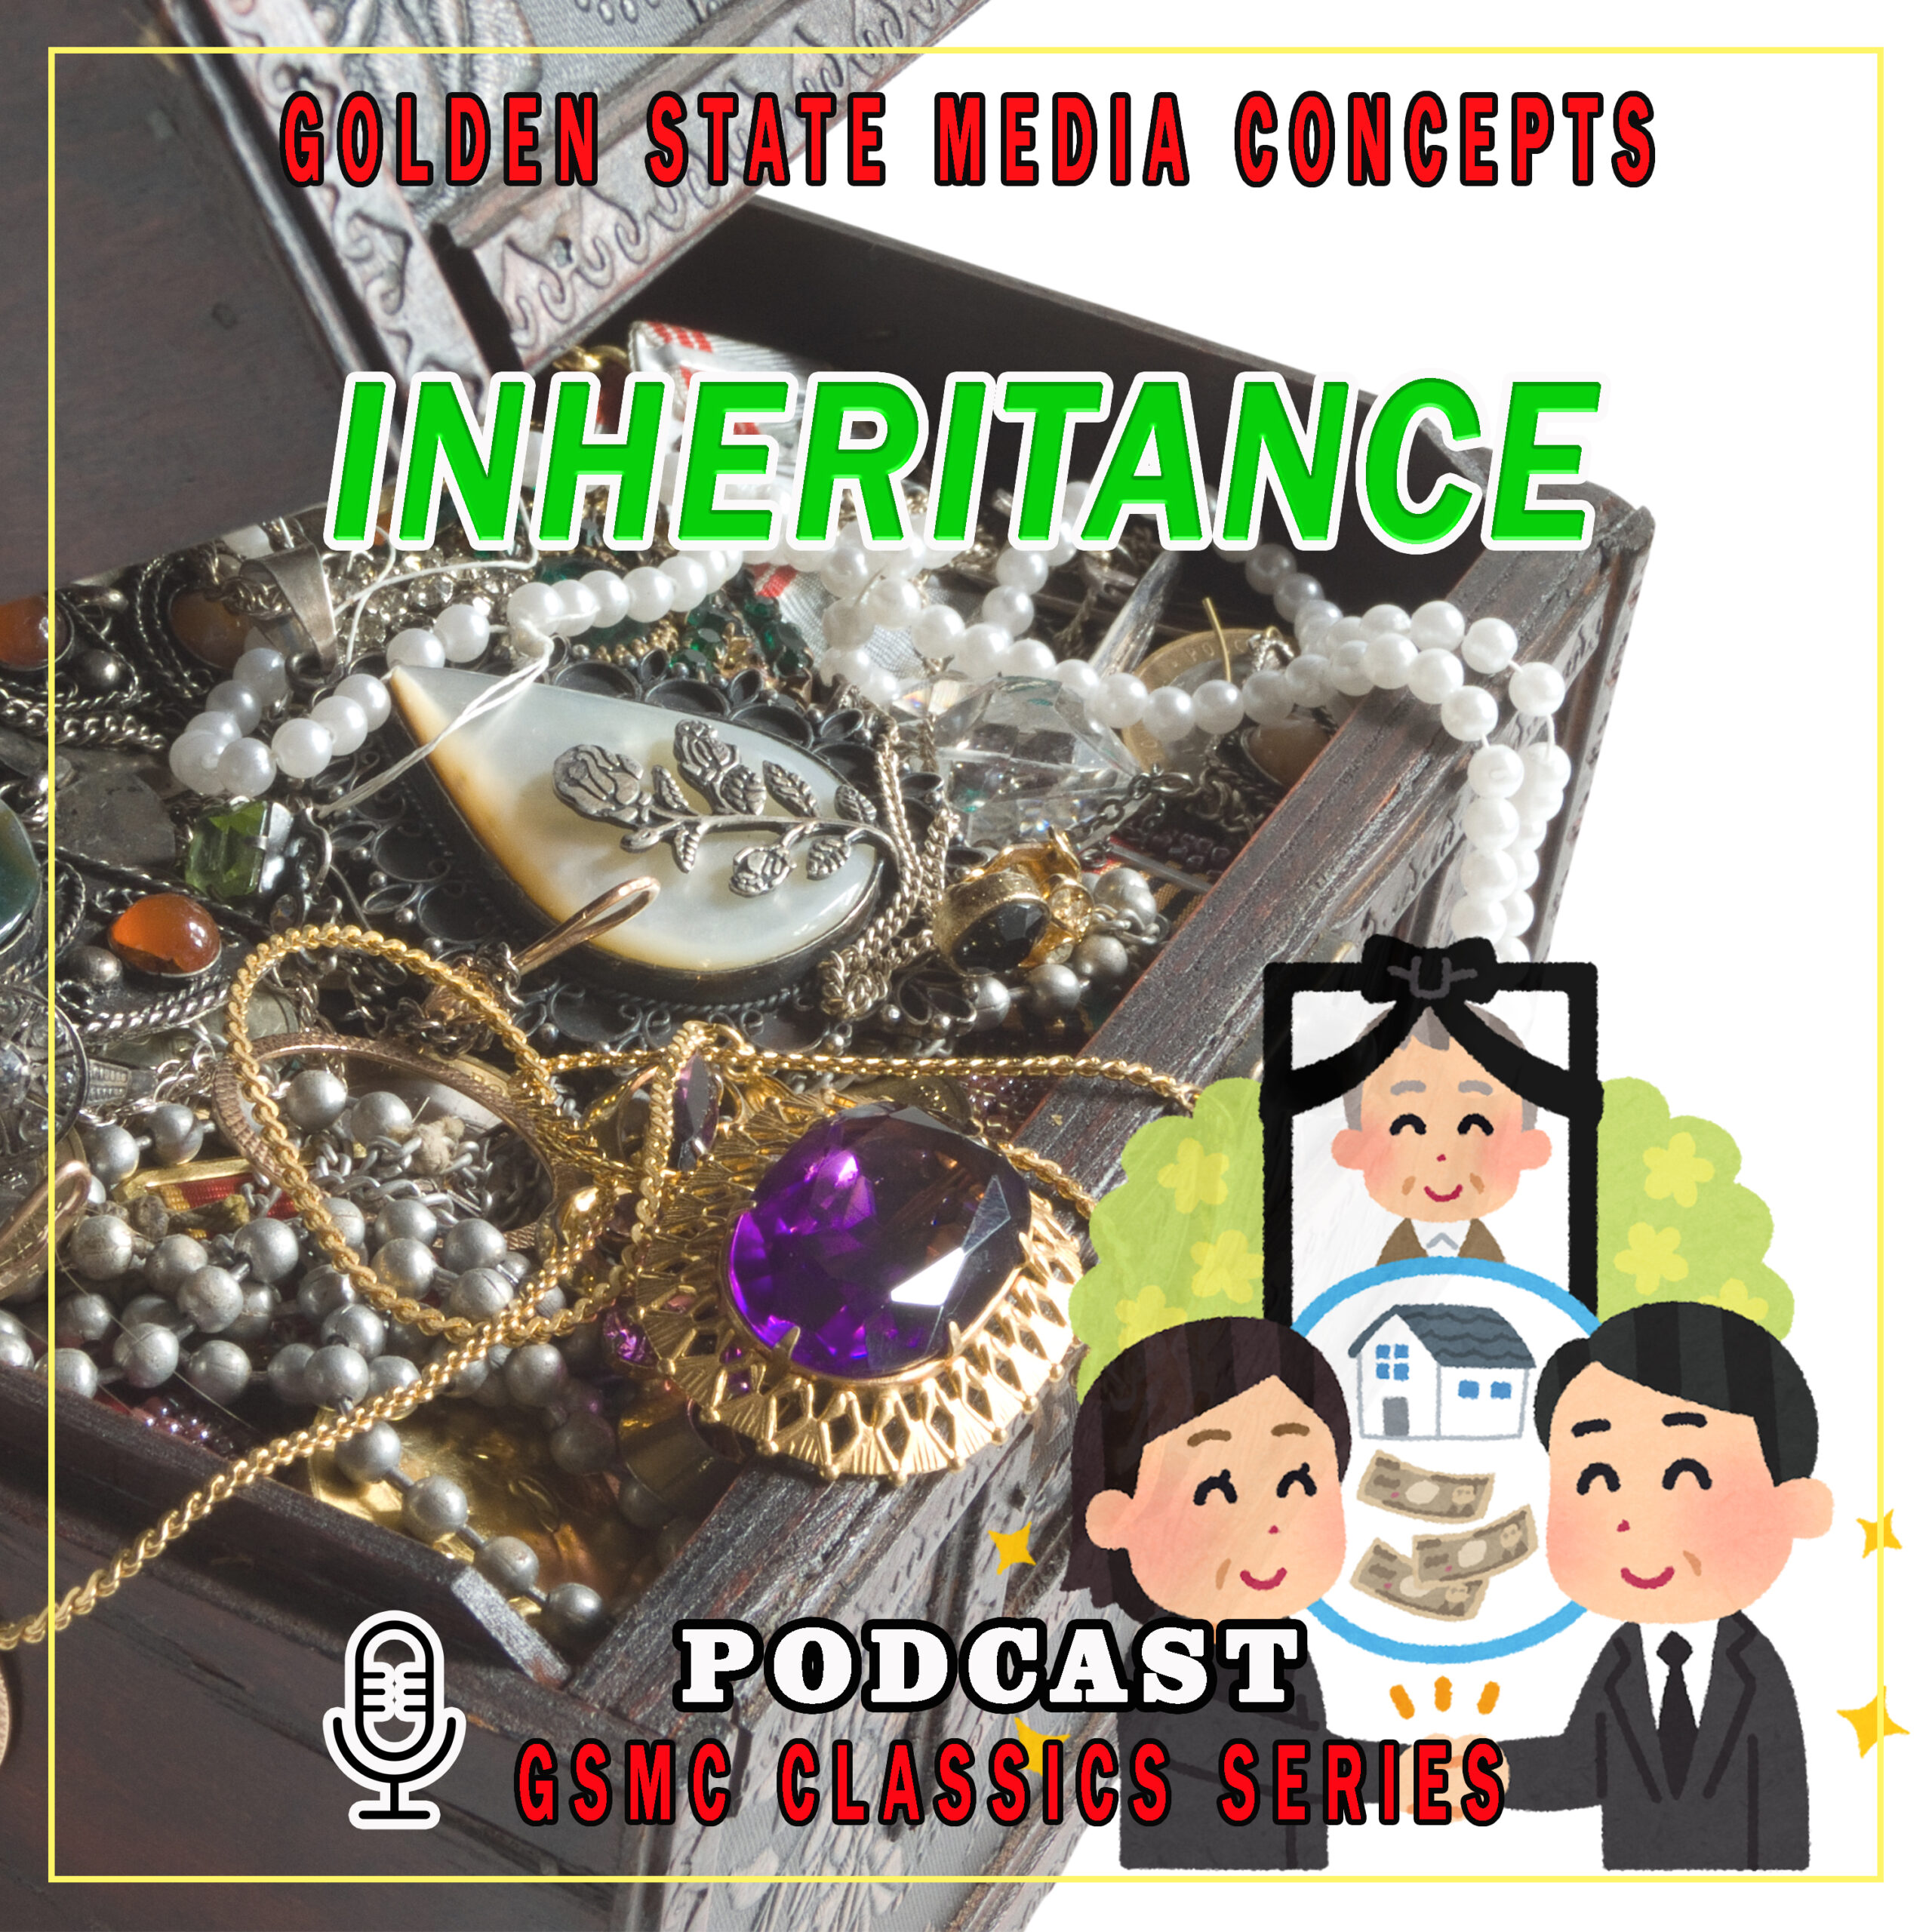 GSMC Classics: Inheritance​